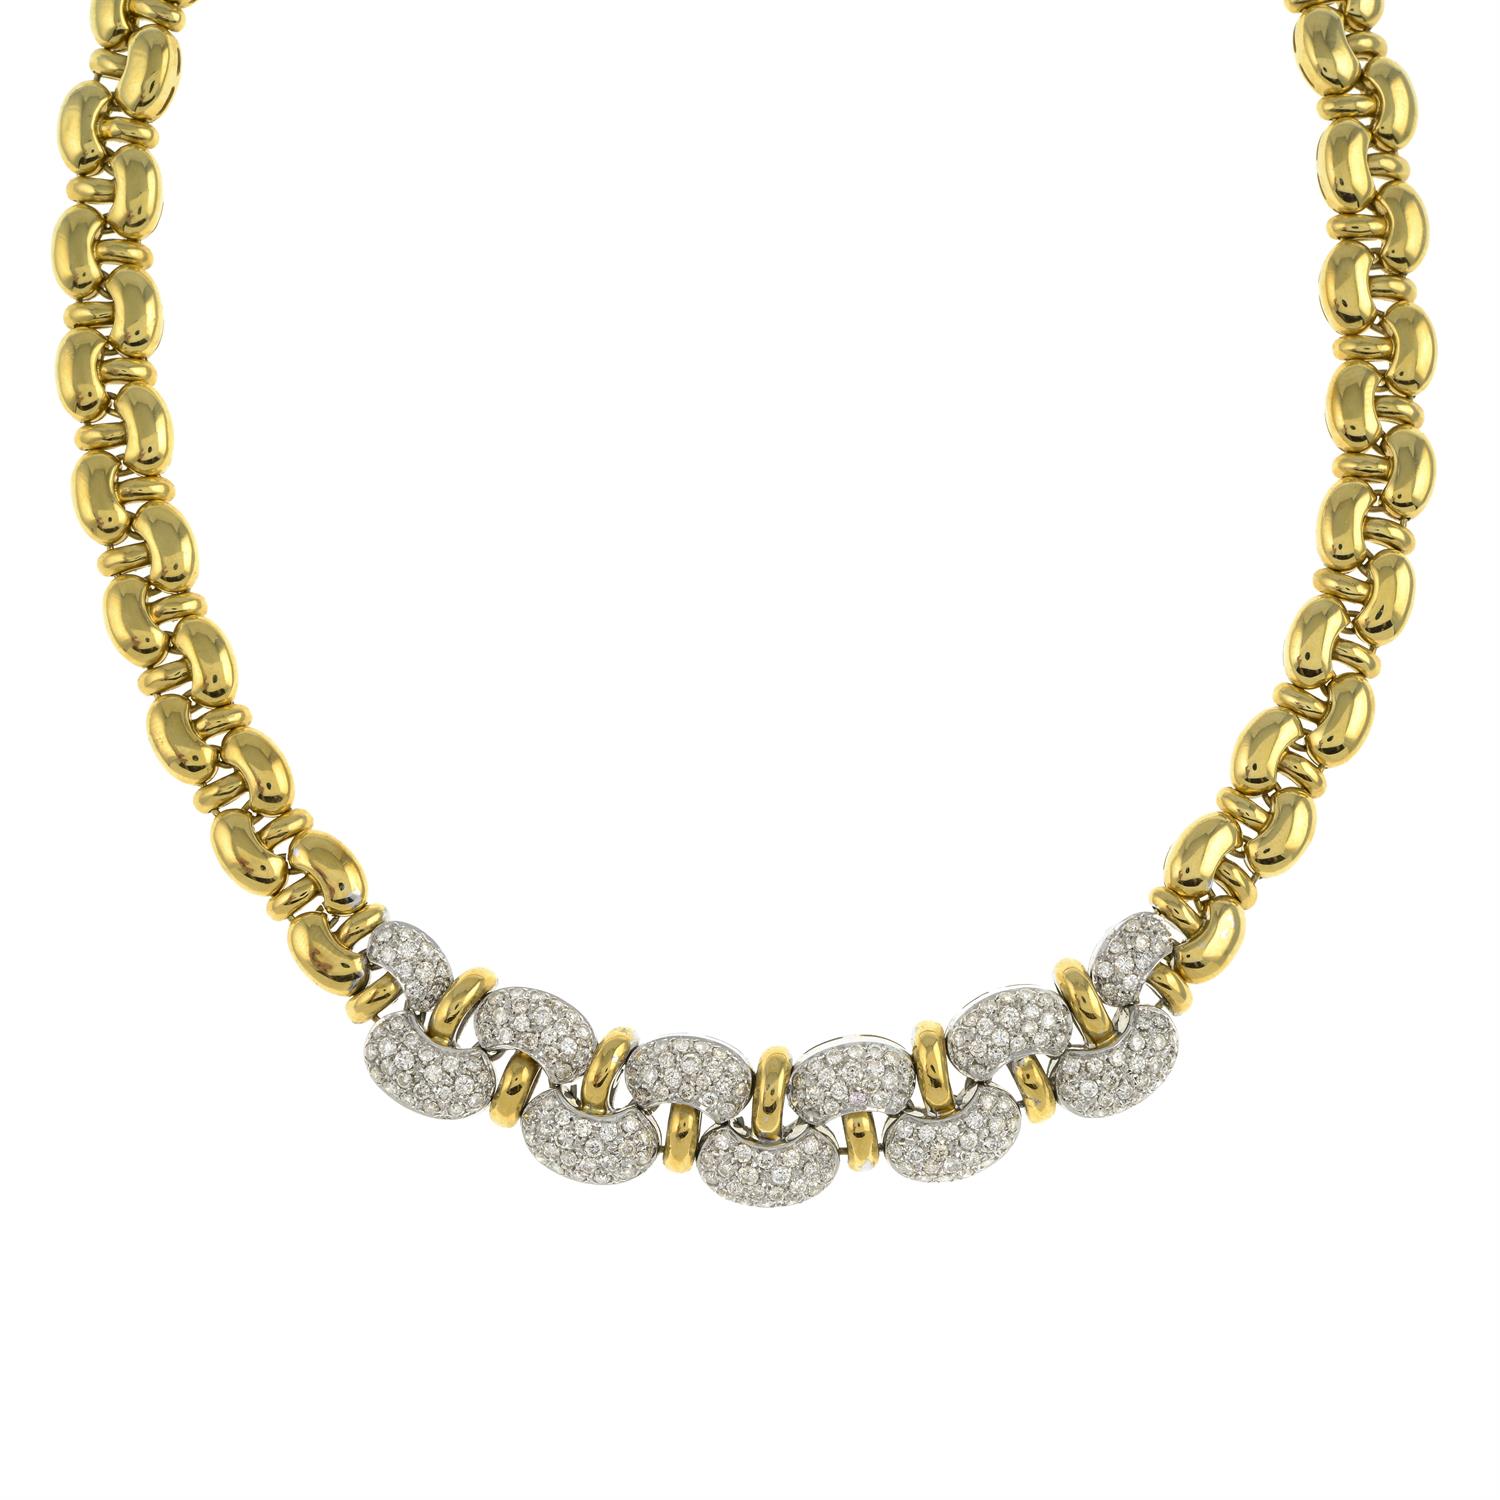 Diamond necklace and matching bracelet - Image 4 of 7